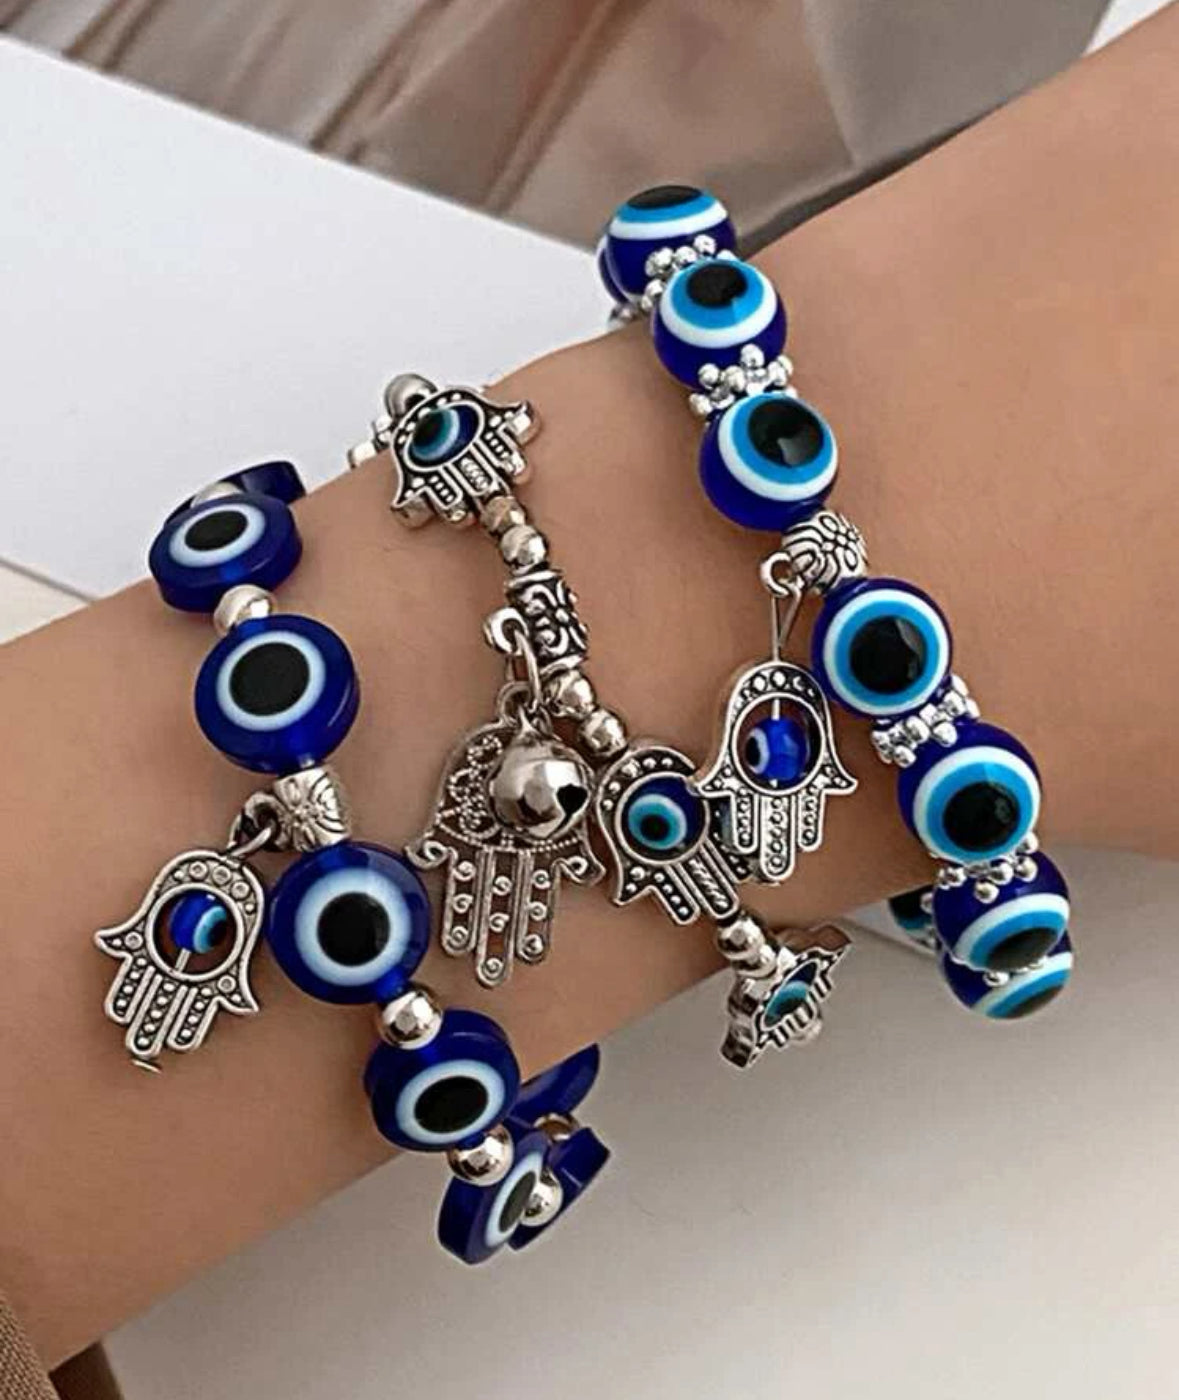 Beautiful evil eye 🧿 bracelet